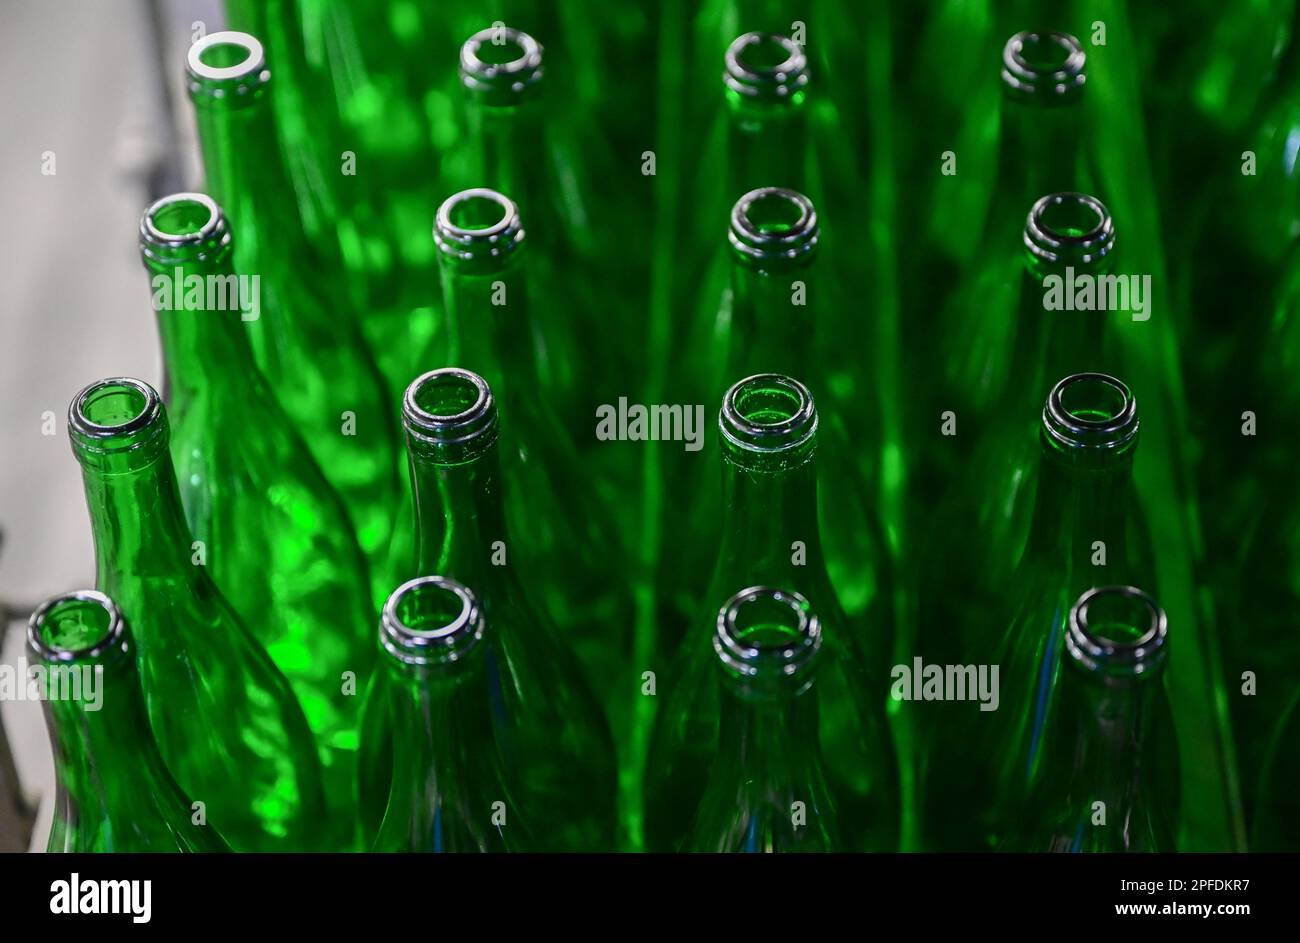 Botella de 1 litro fotografías e imágenes de alta resolución - Alamy